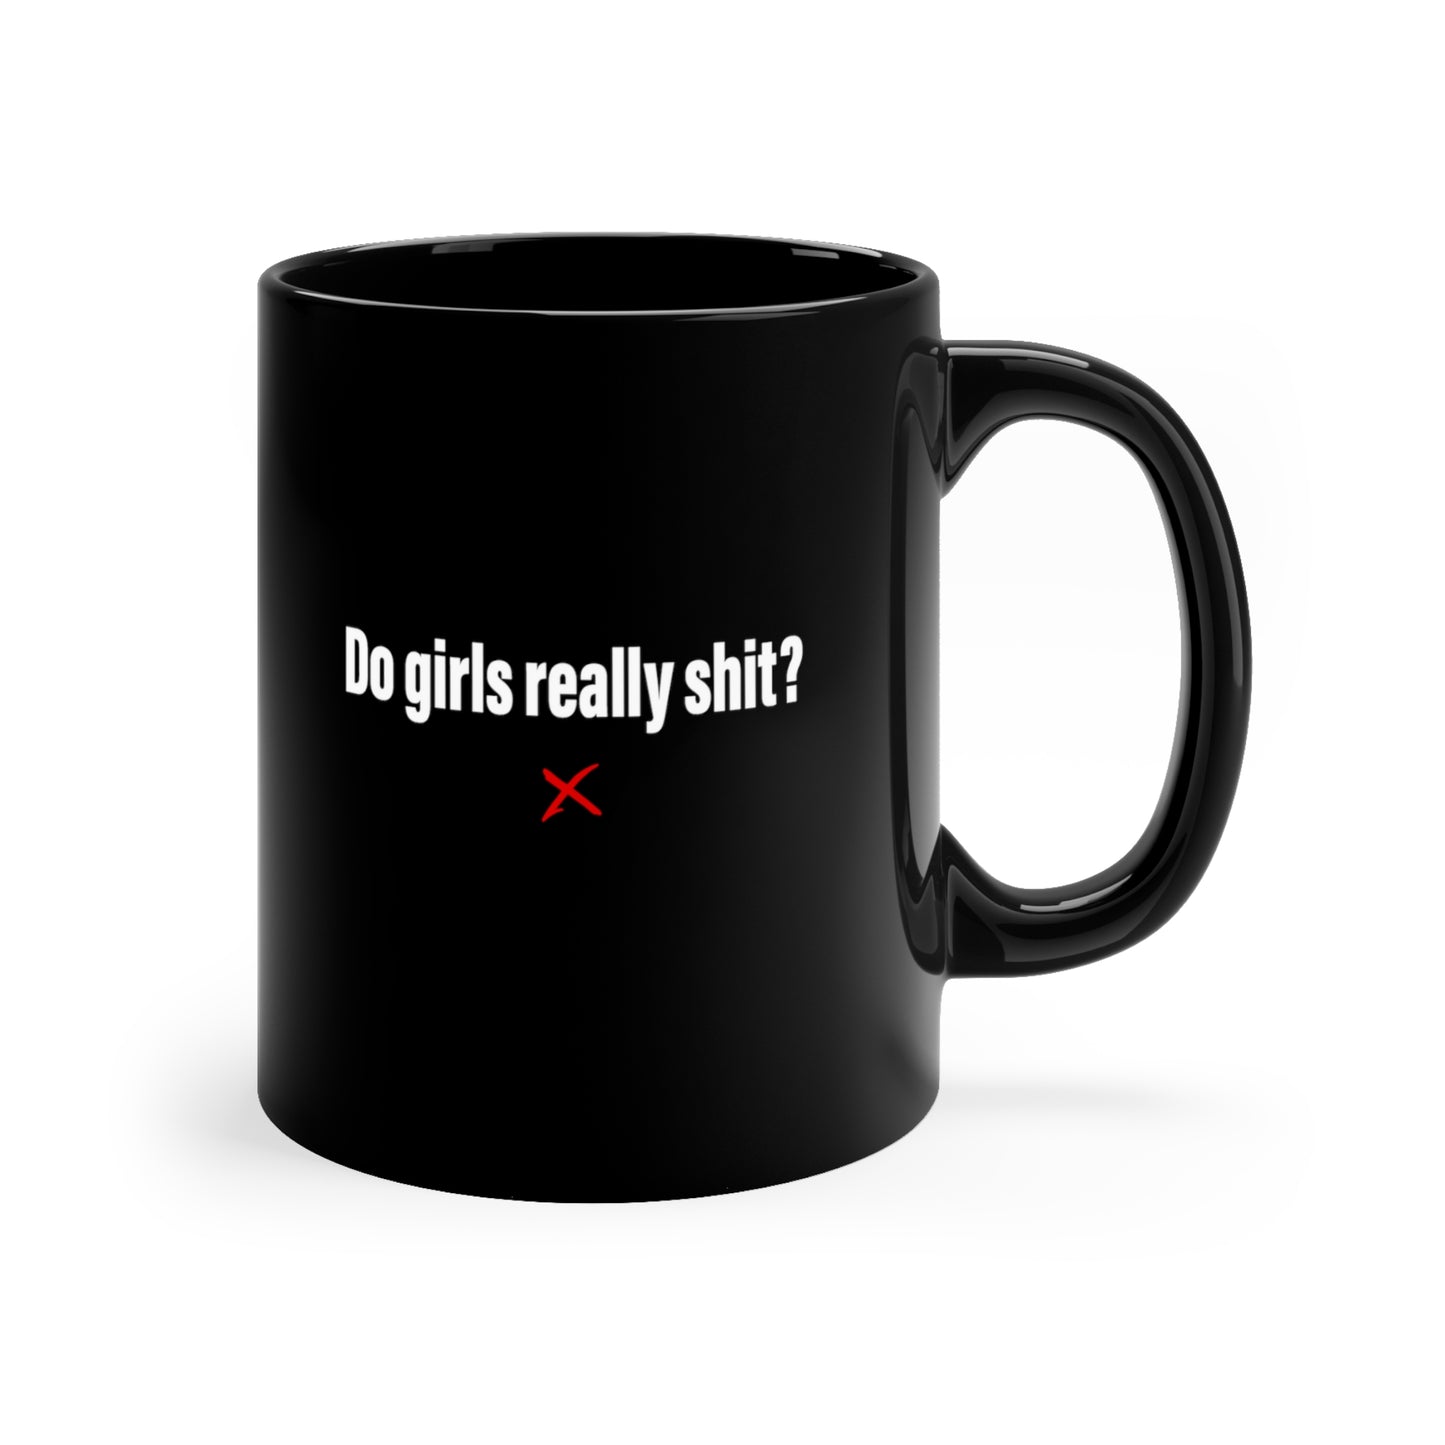 Do girls really shit? - Mug